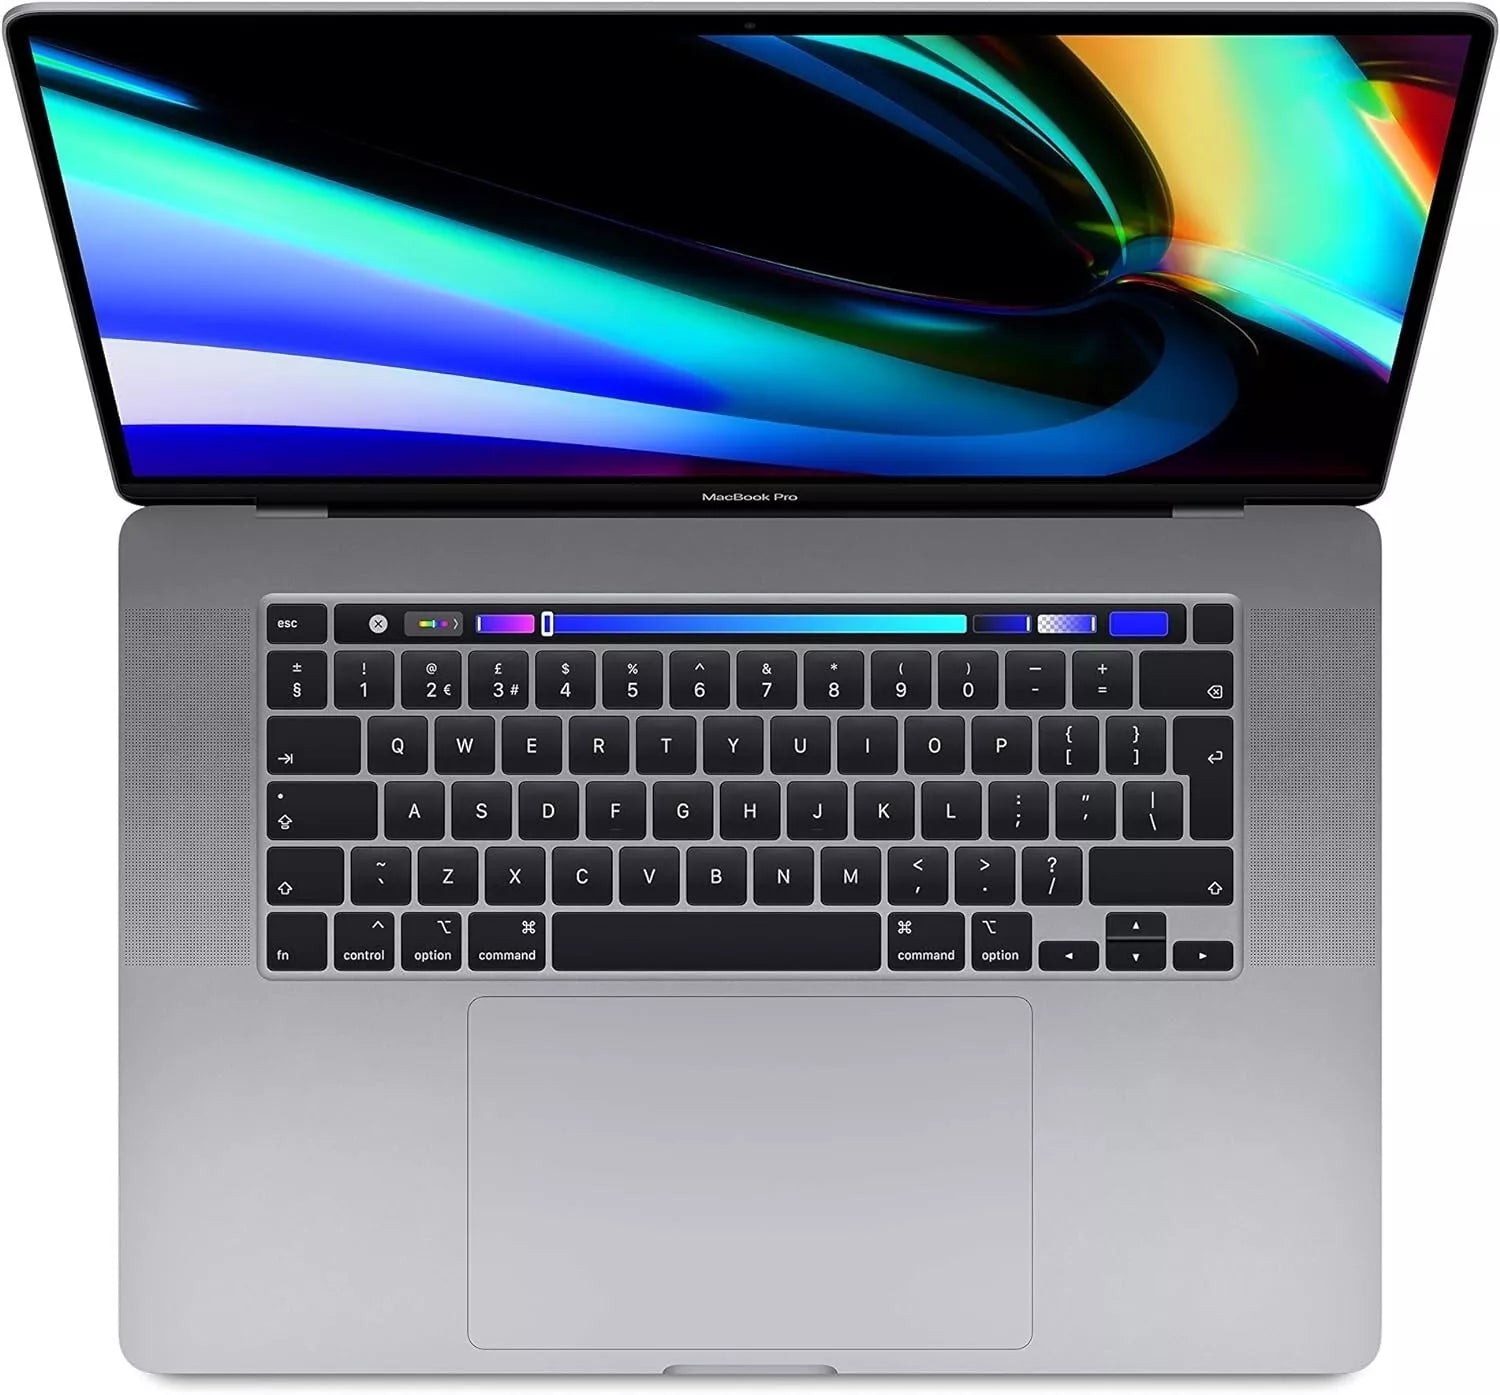 MacBook Pro (16-inch 2019) Core i7 @ 2.6GHz 6-Core 16GB 512GB SSD AMD Radeon Pro